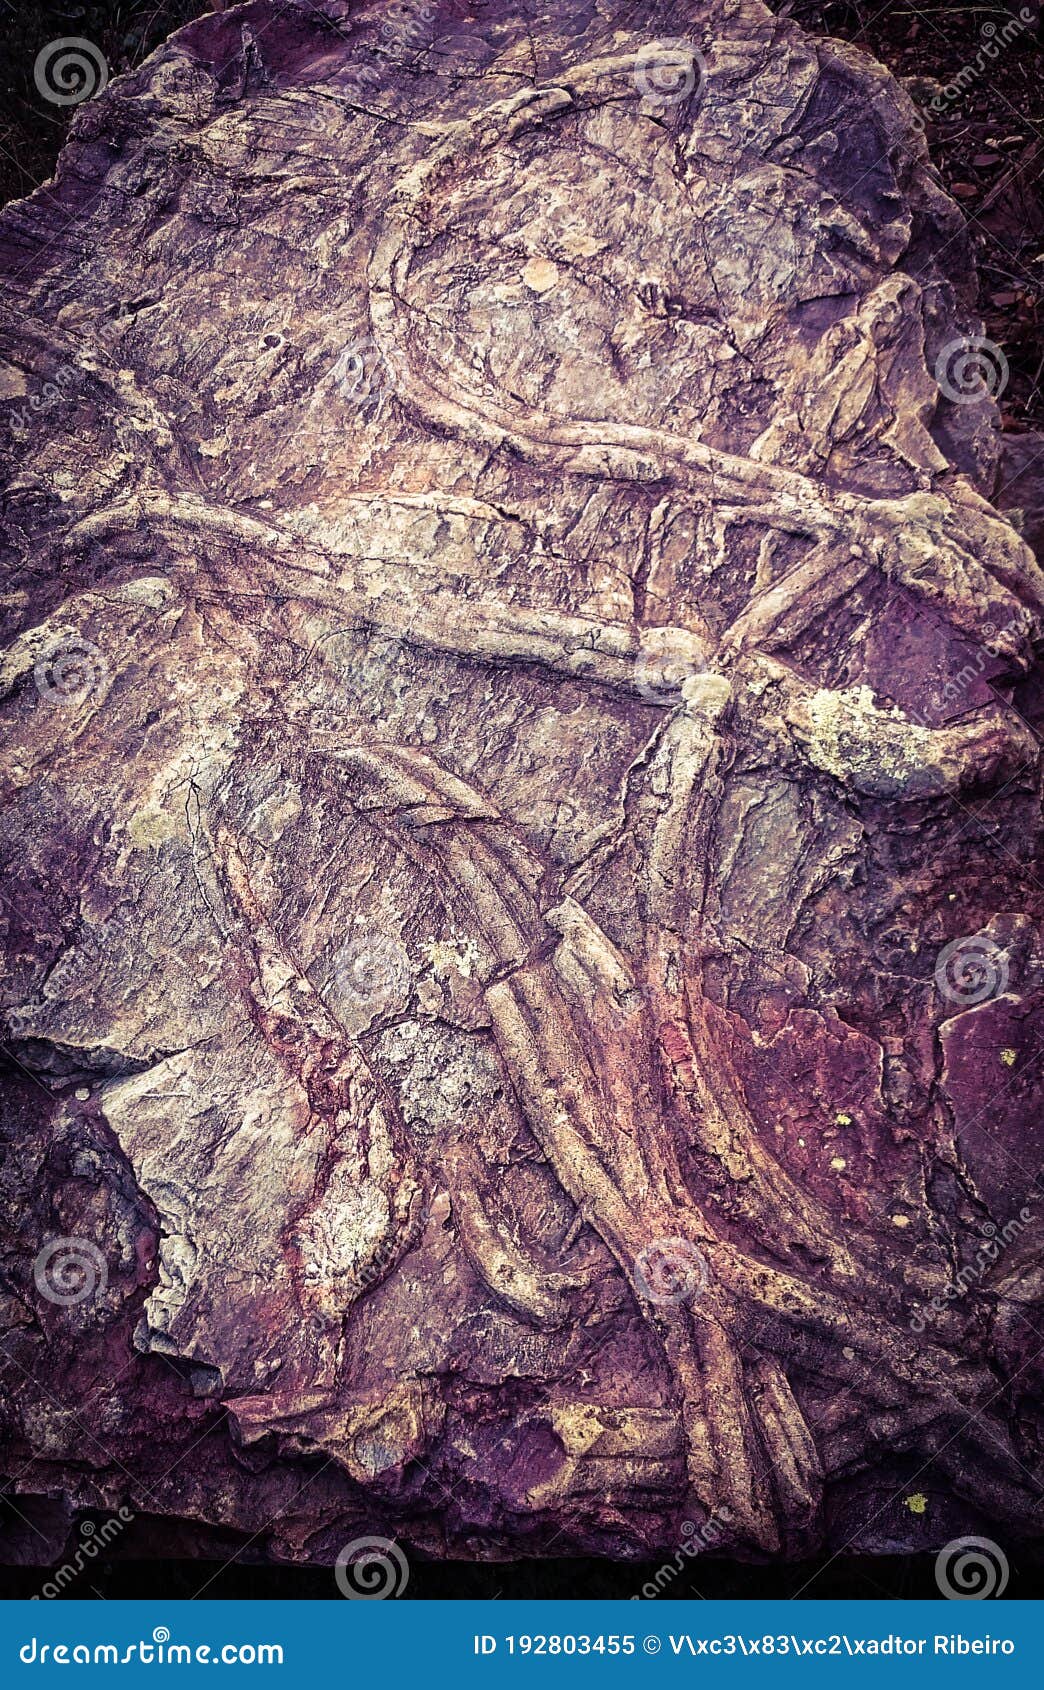 fossils in penha garcia